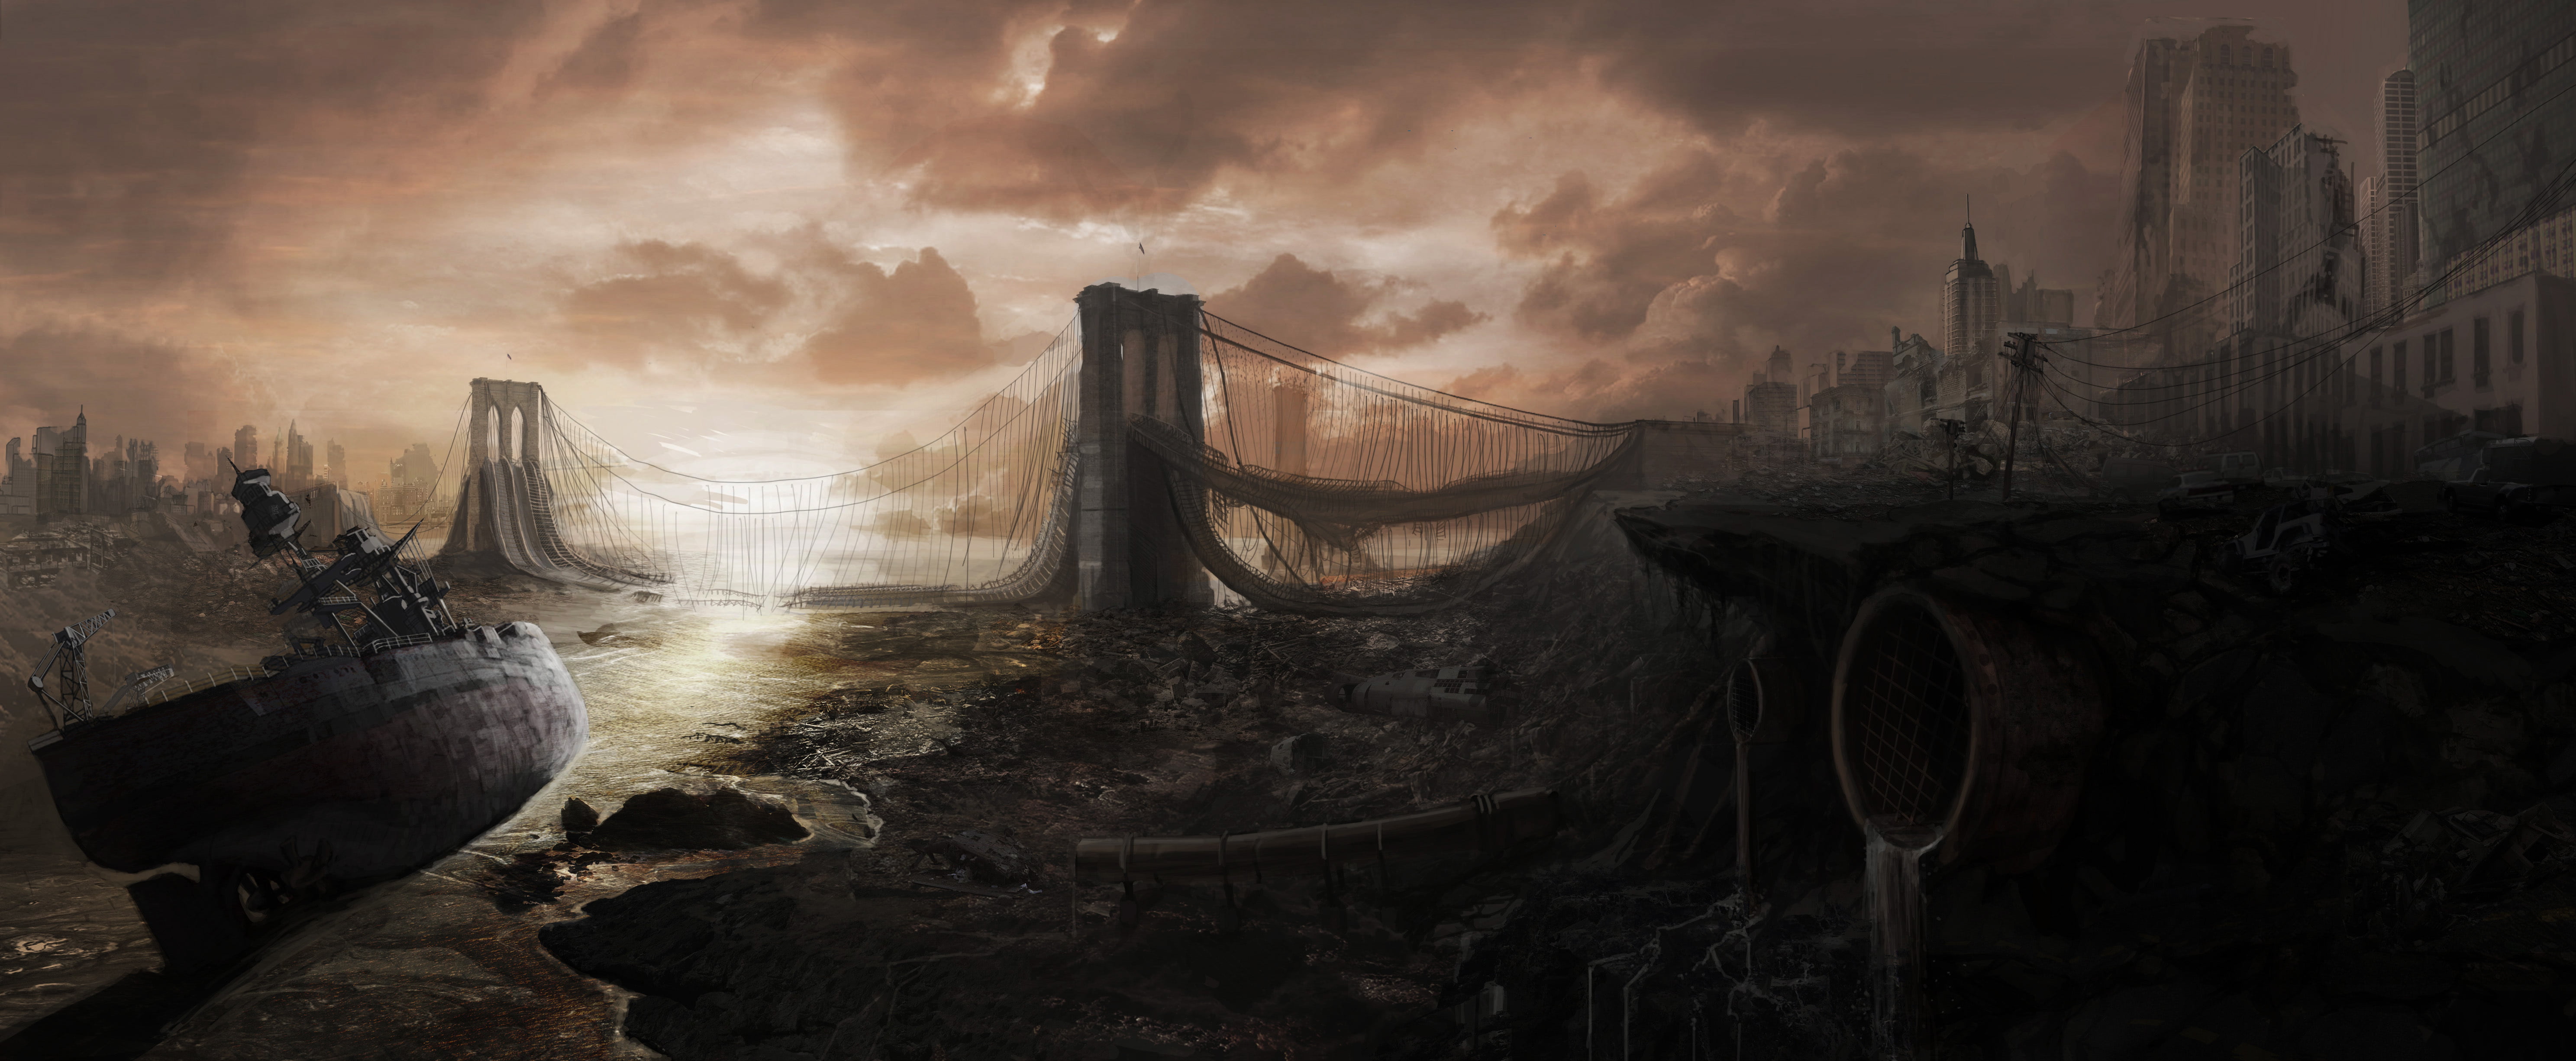 ship illustraiton, bridge, the city, devastation, ruins, postapokalipsis